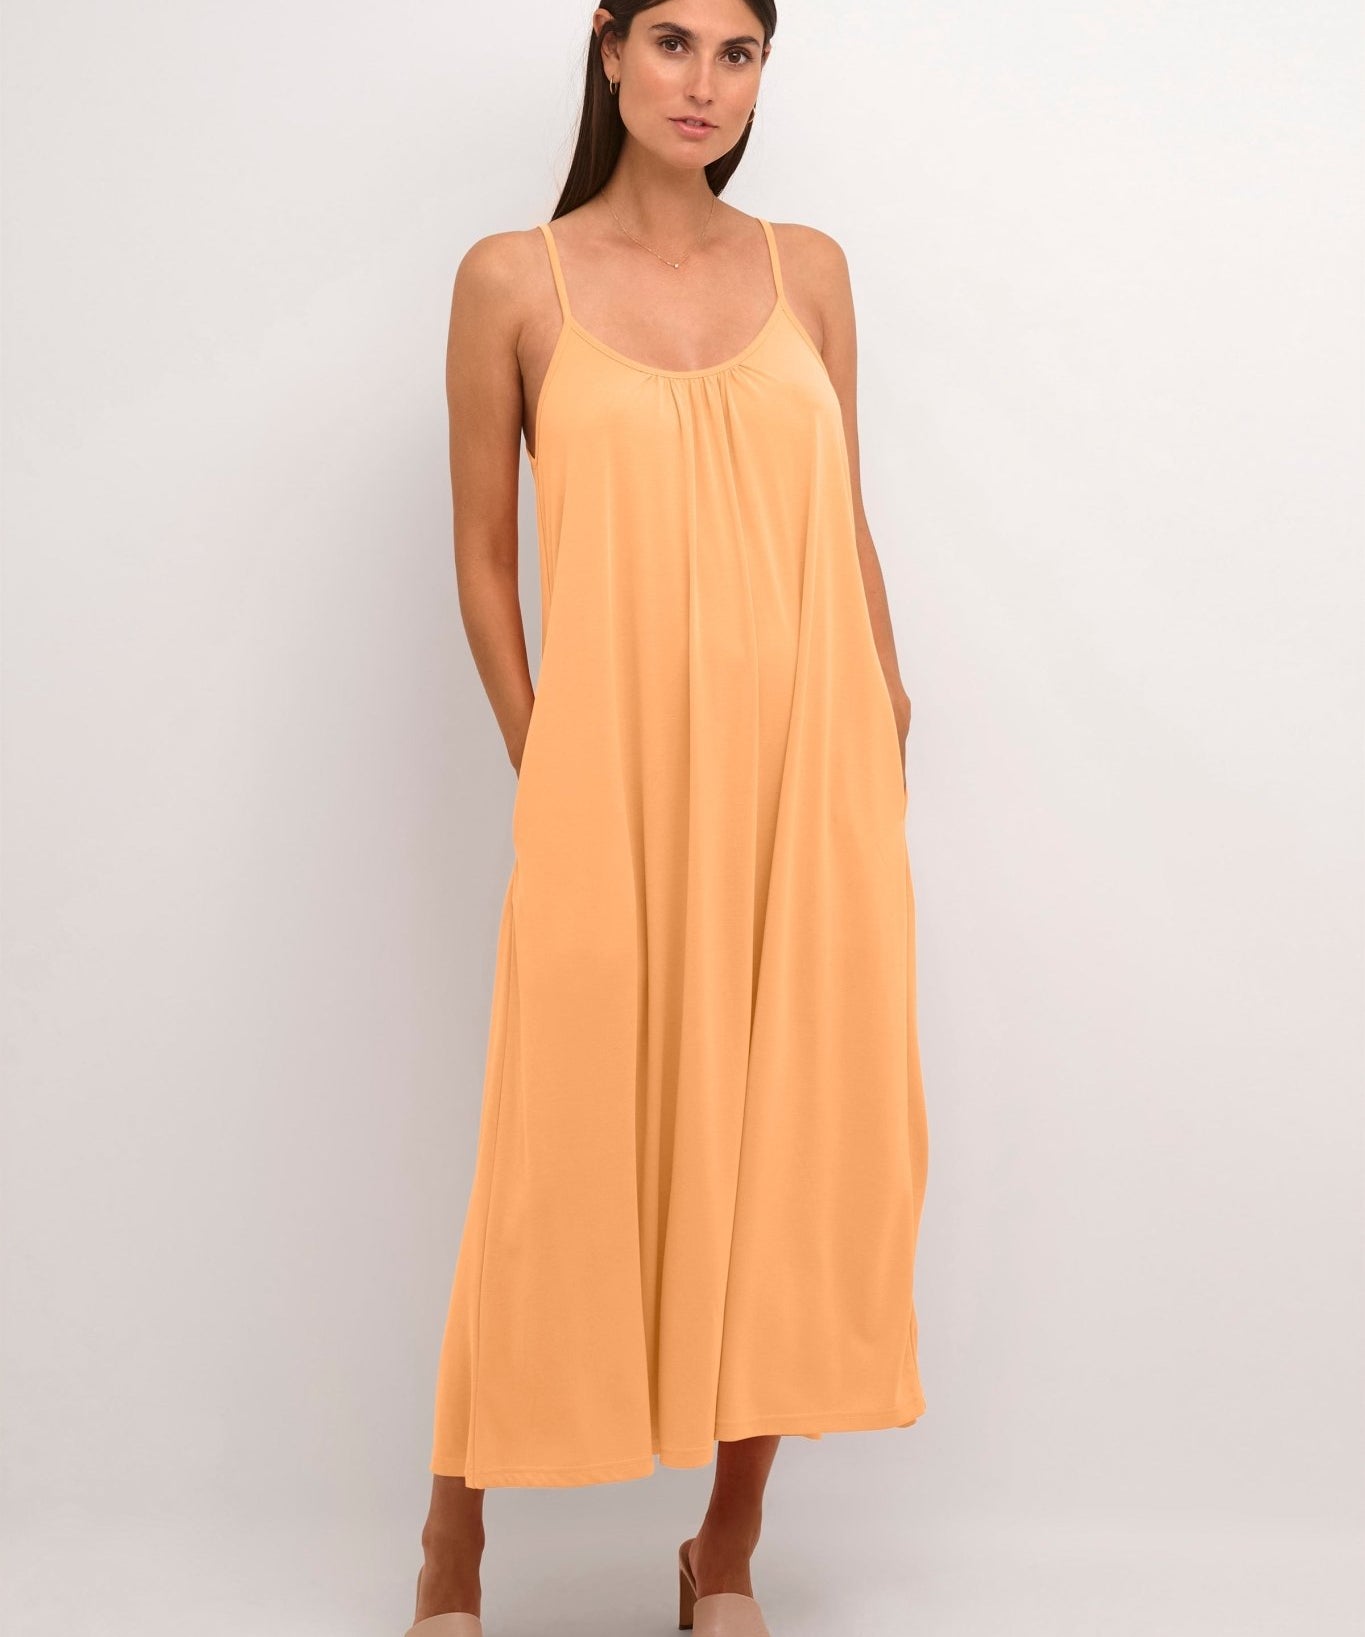 Kajsa Strap Dress by Culture - tangerine - Blue Sky Fashions & Lingerie